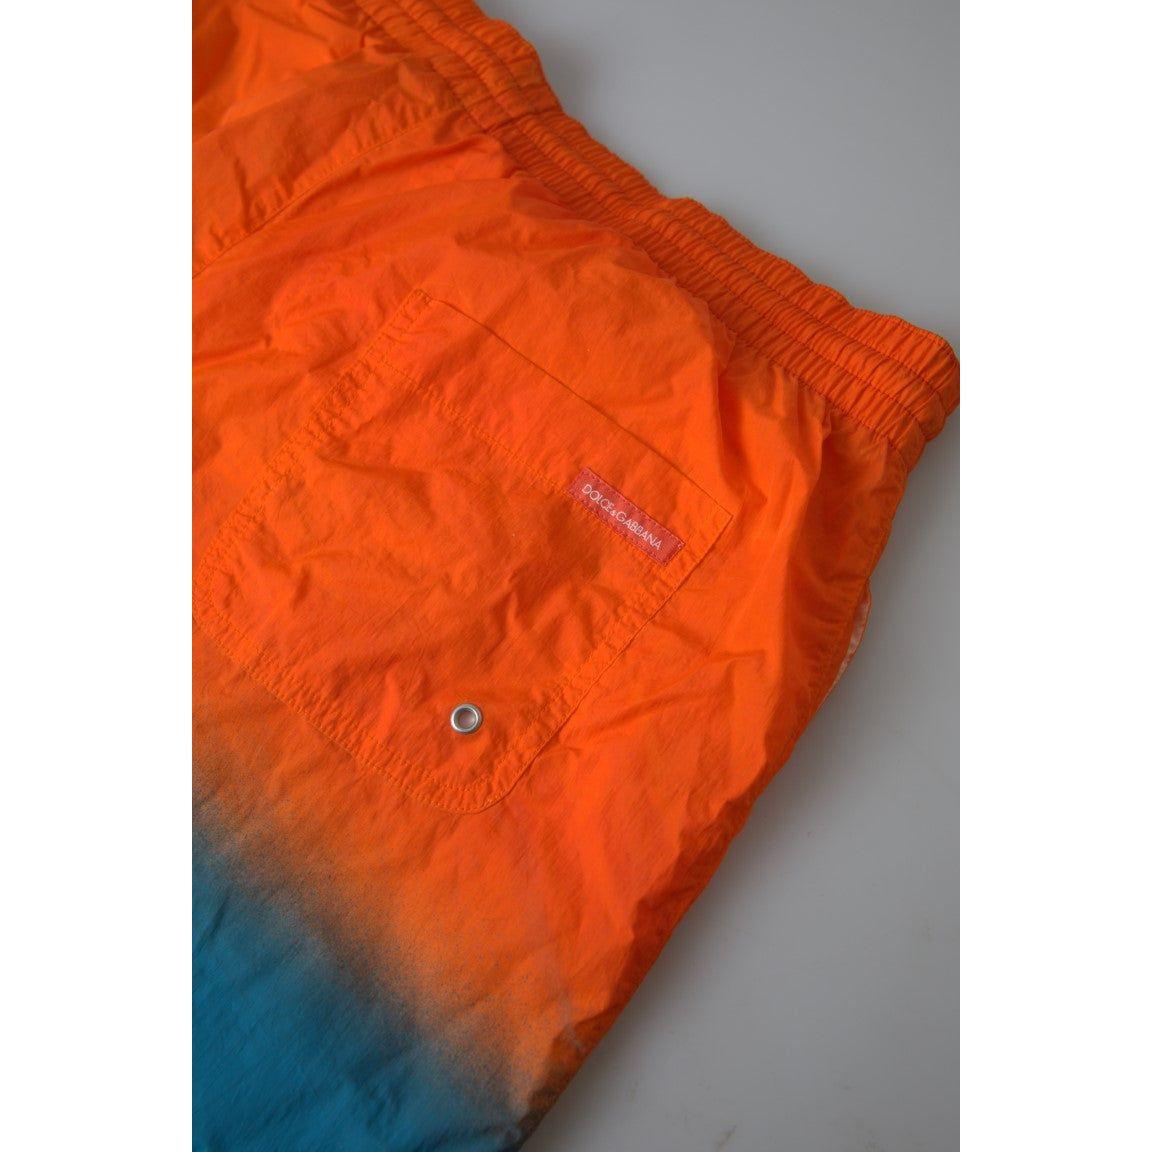 Dolce & Gabbana Gradient Effect Swim Shorts in Vibrant Orange orange-blue-gradient-beachwear-swimwear-shorts